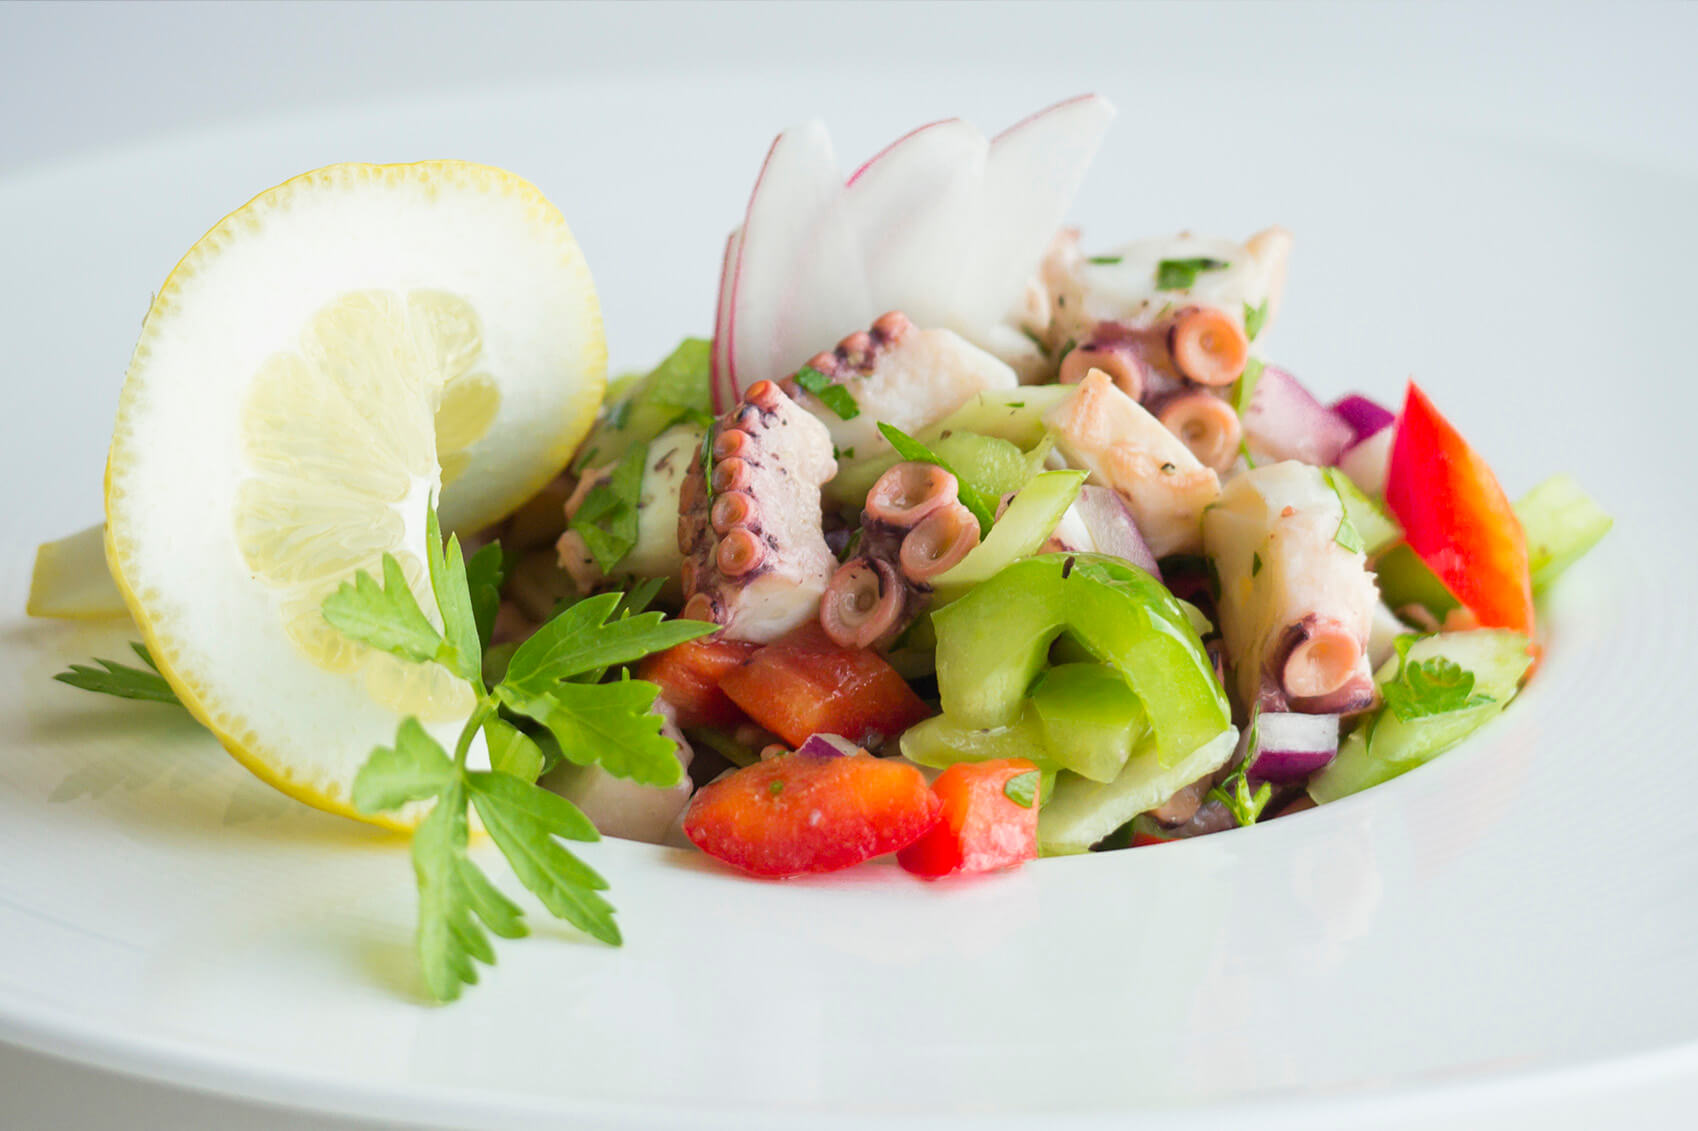 Octopus is great served in a salad lightly dressed in lemon or vinegar.